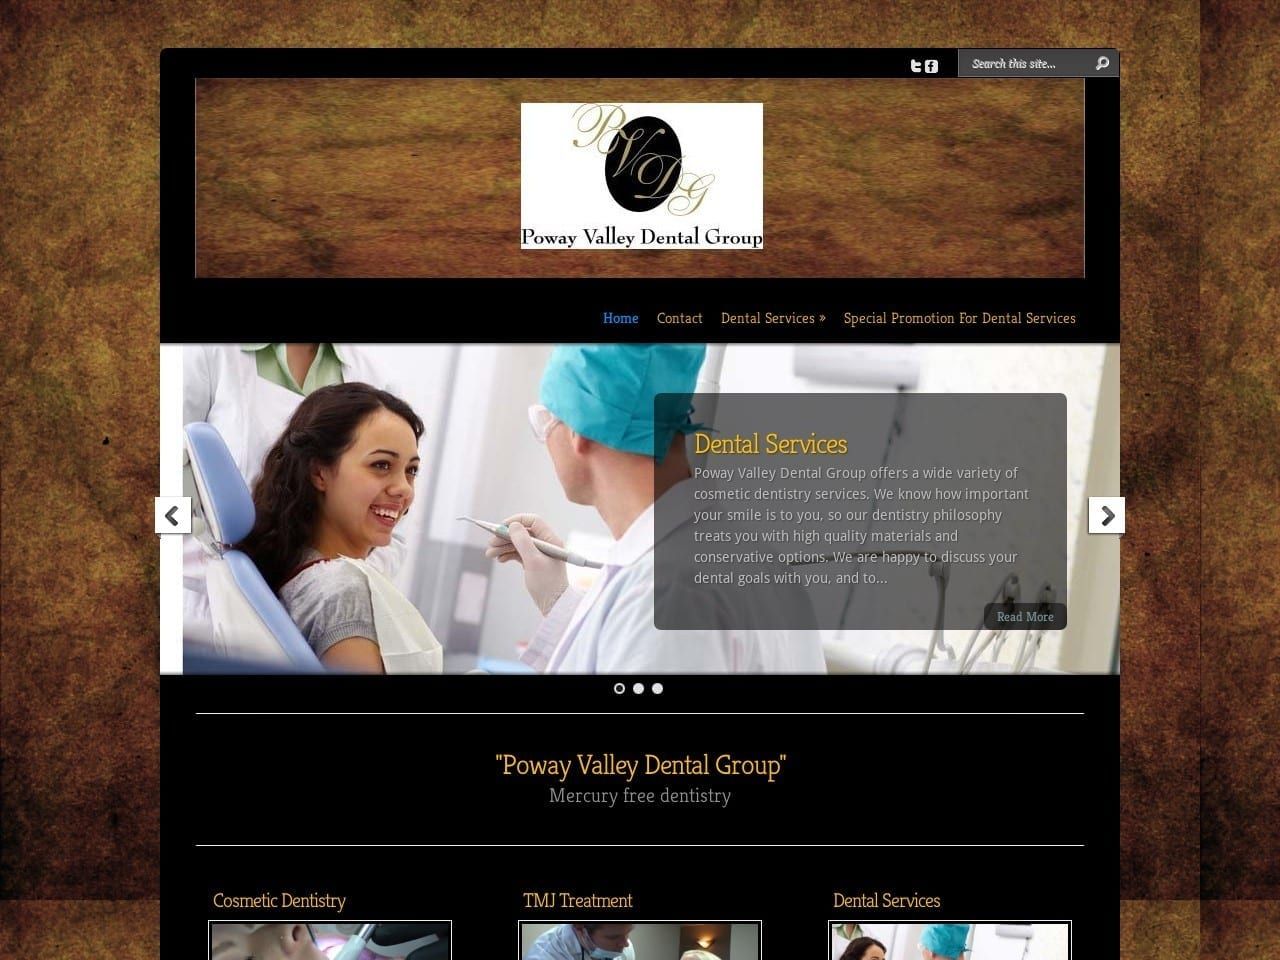 Poway Valley Dental Group Website Screenshot from powayvalleydentalgroup.com